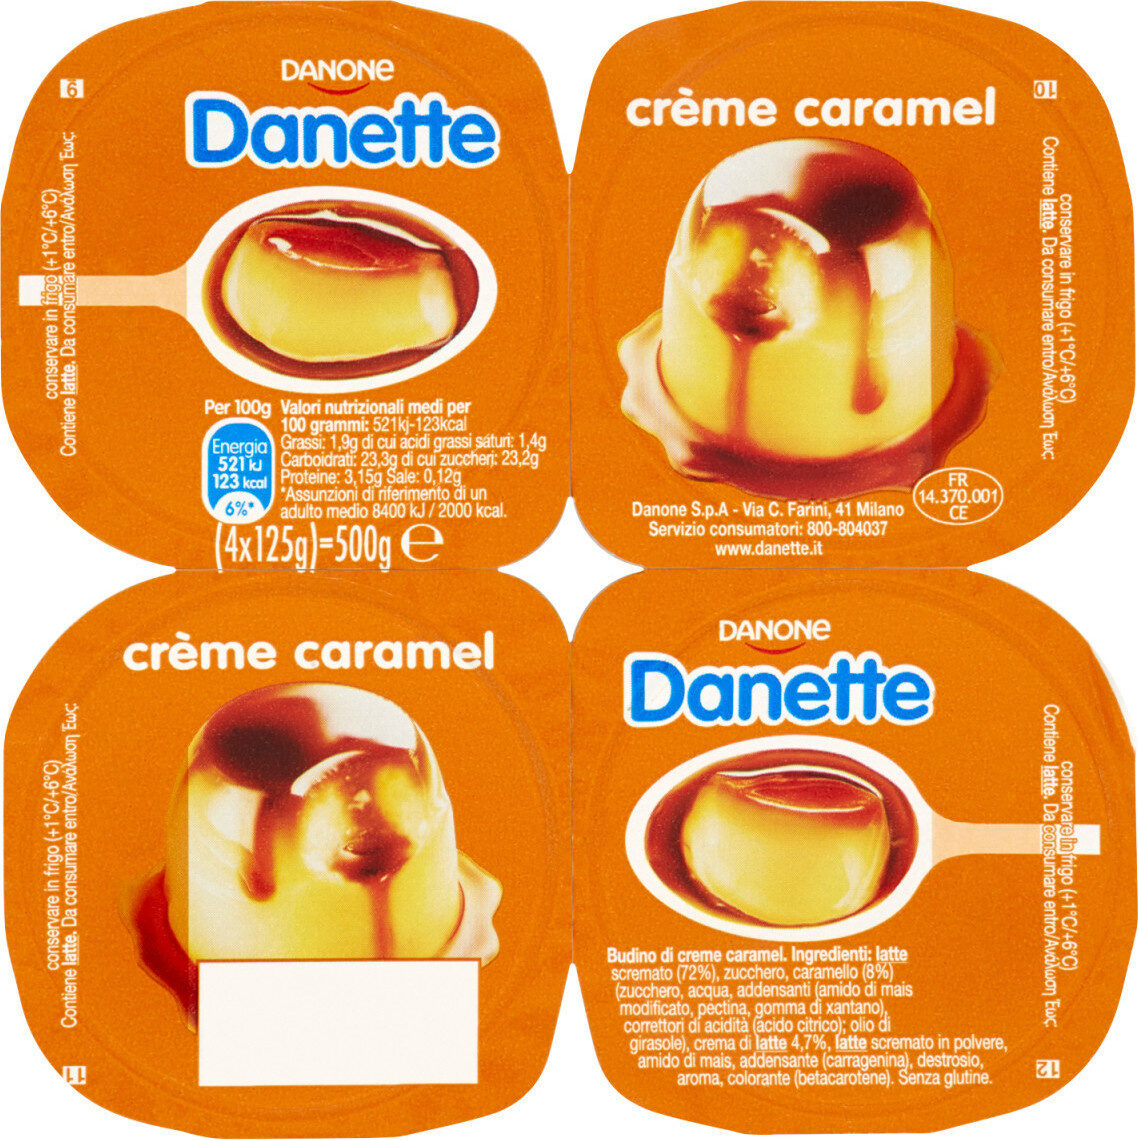 Danone Dannette pudding, crème caramel flavored (France)